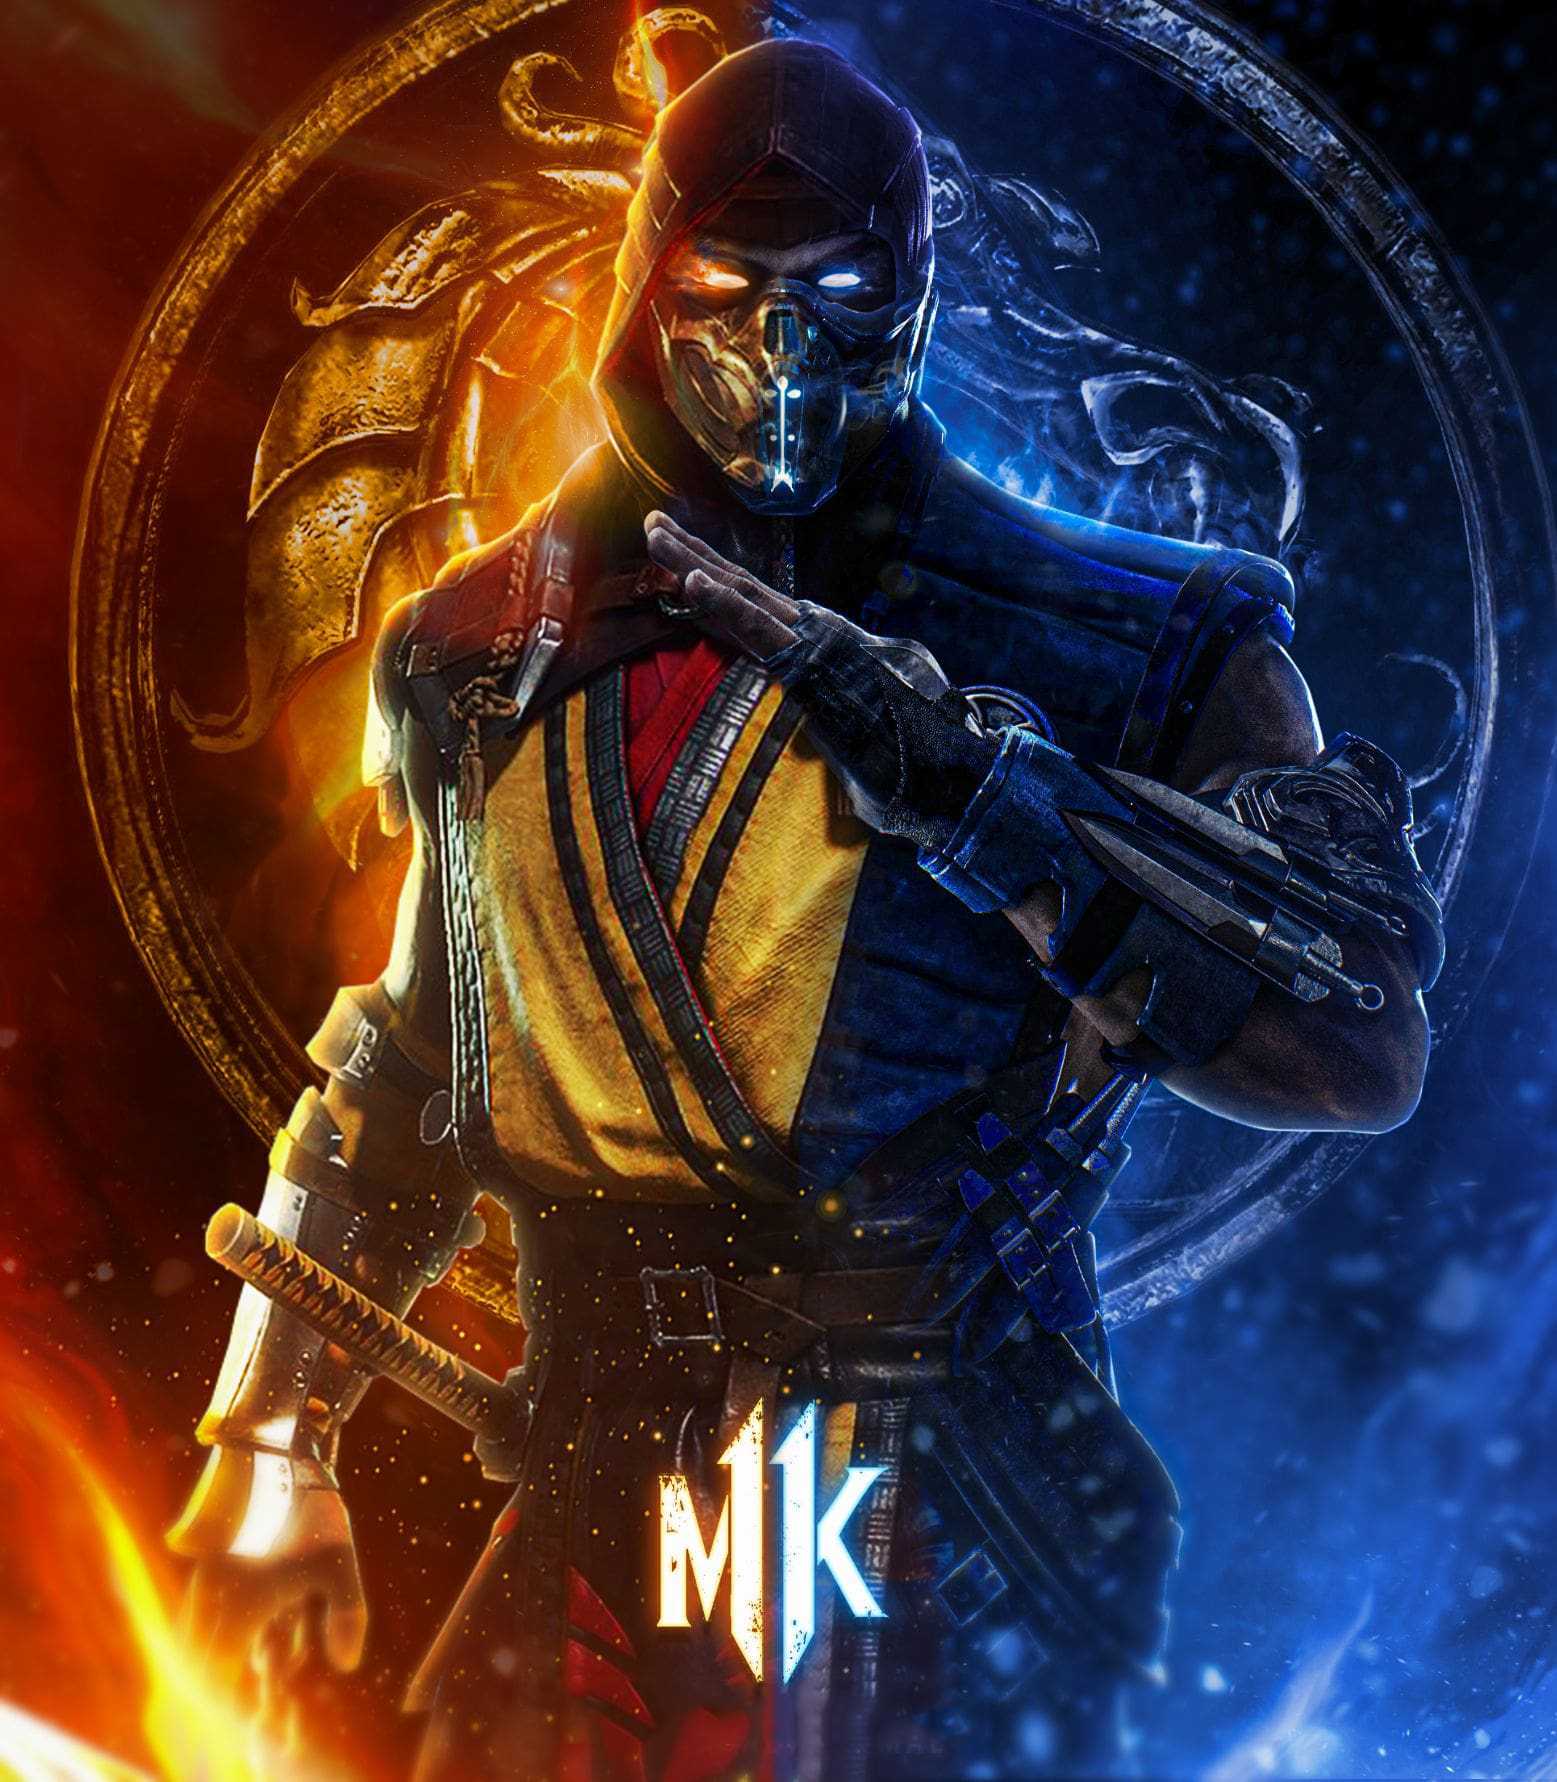 Mortal Kombat 2021 HD Wallpapers - Wallpaper Cave.